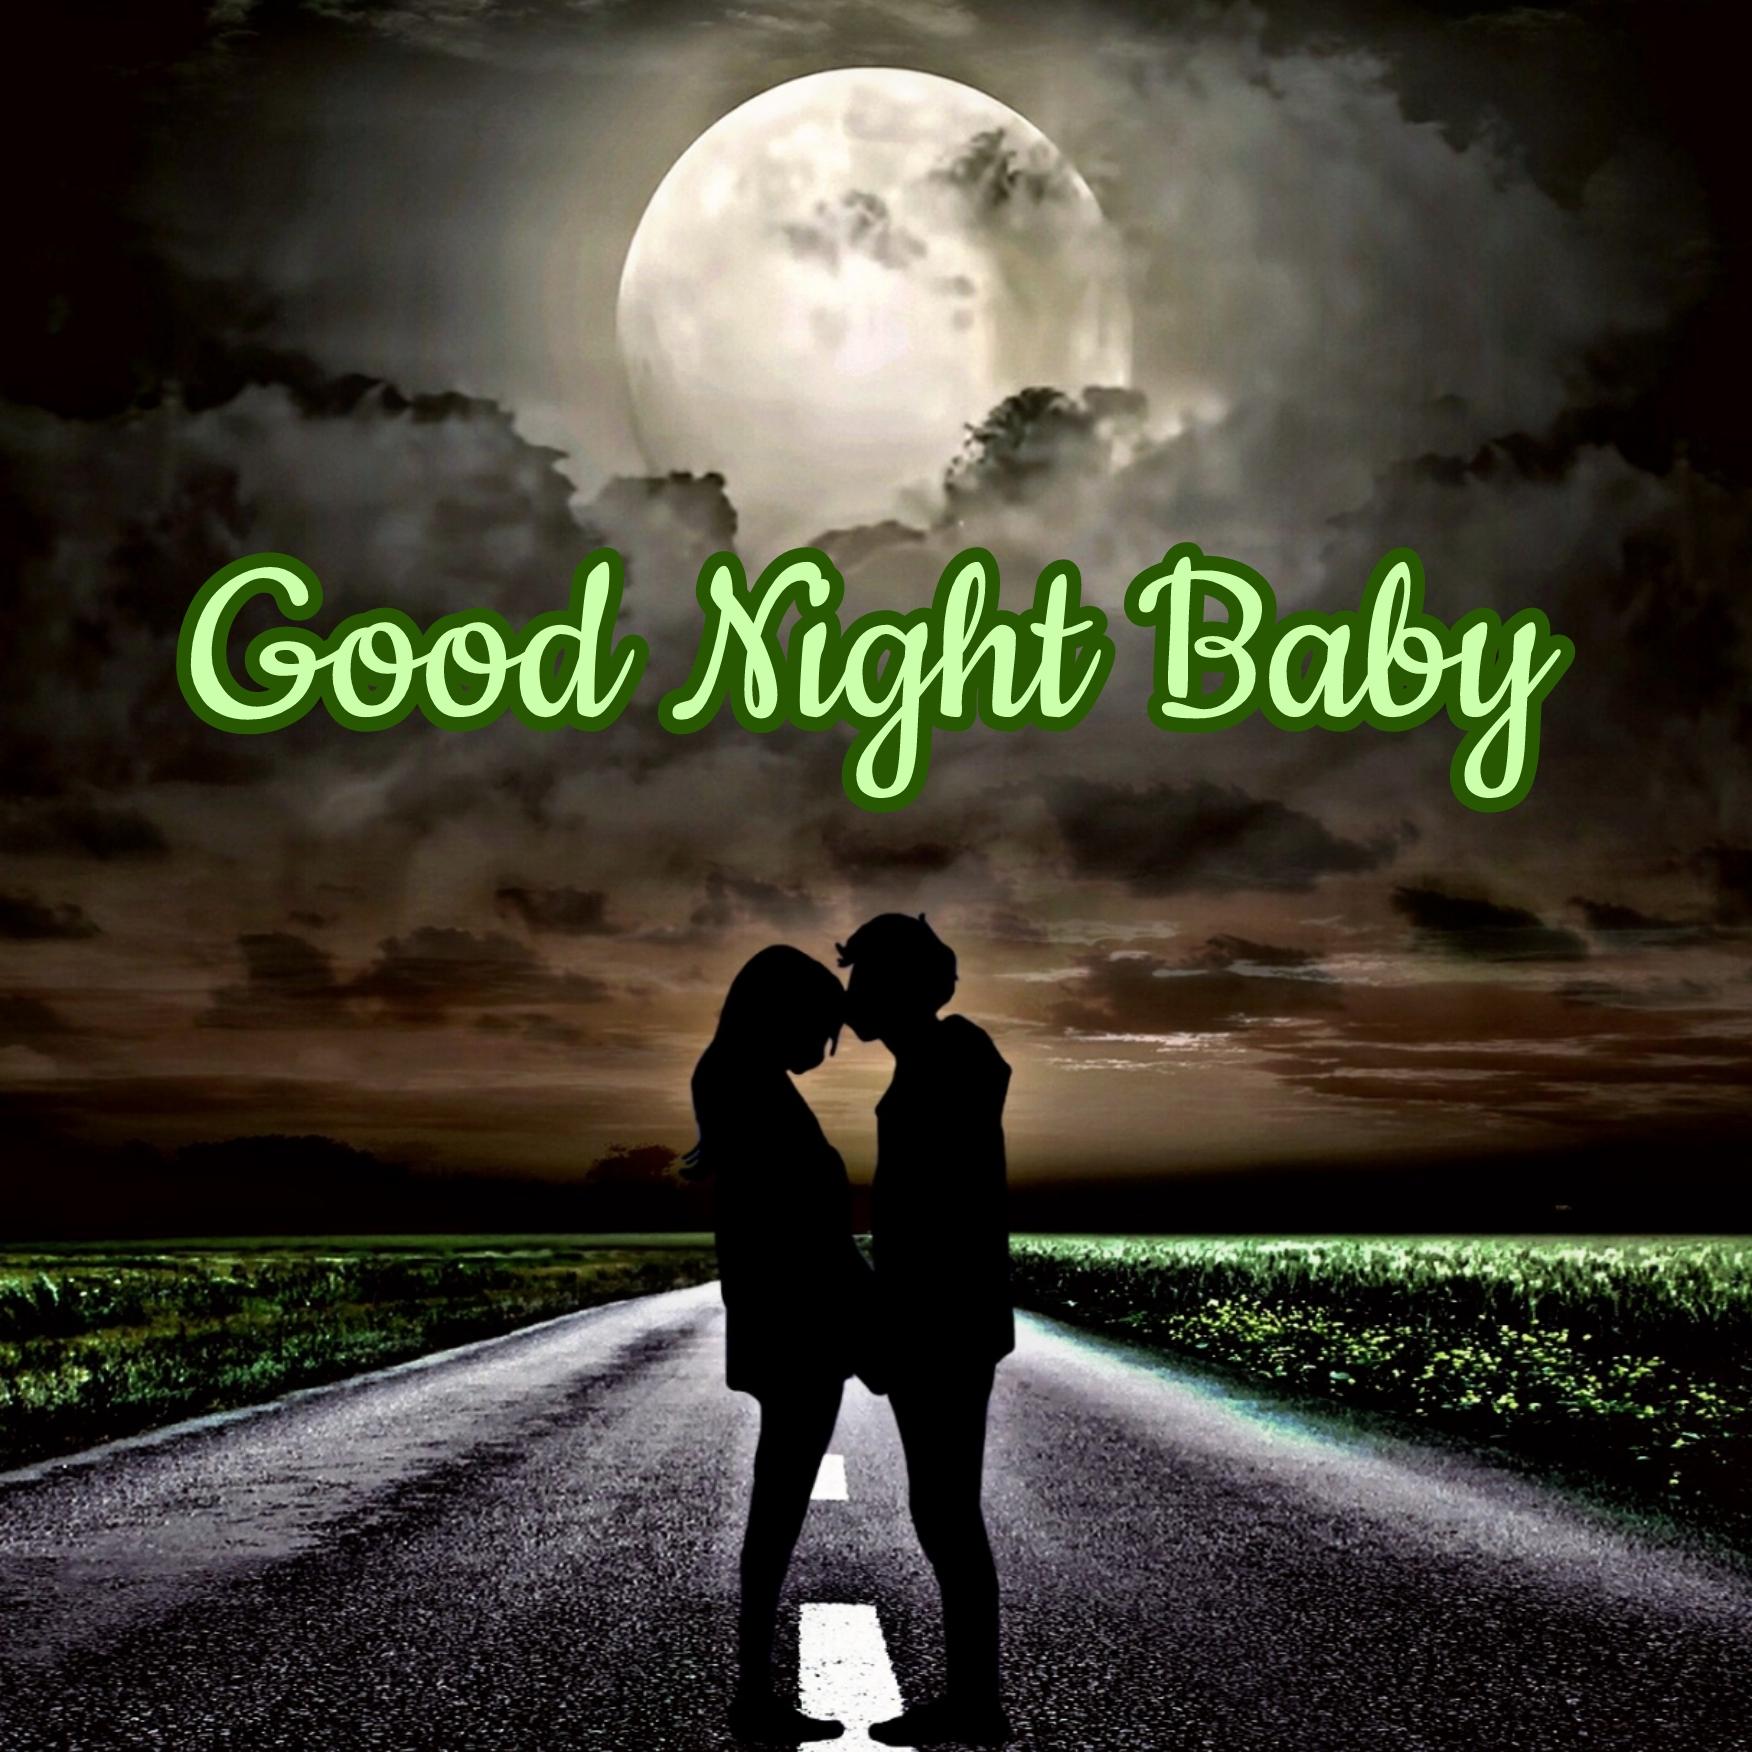 Romantic Good Night Baby Images